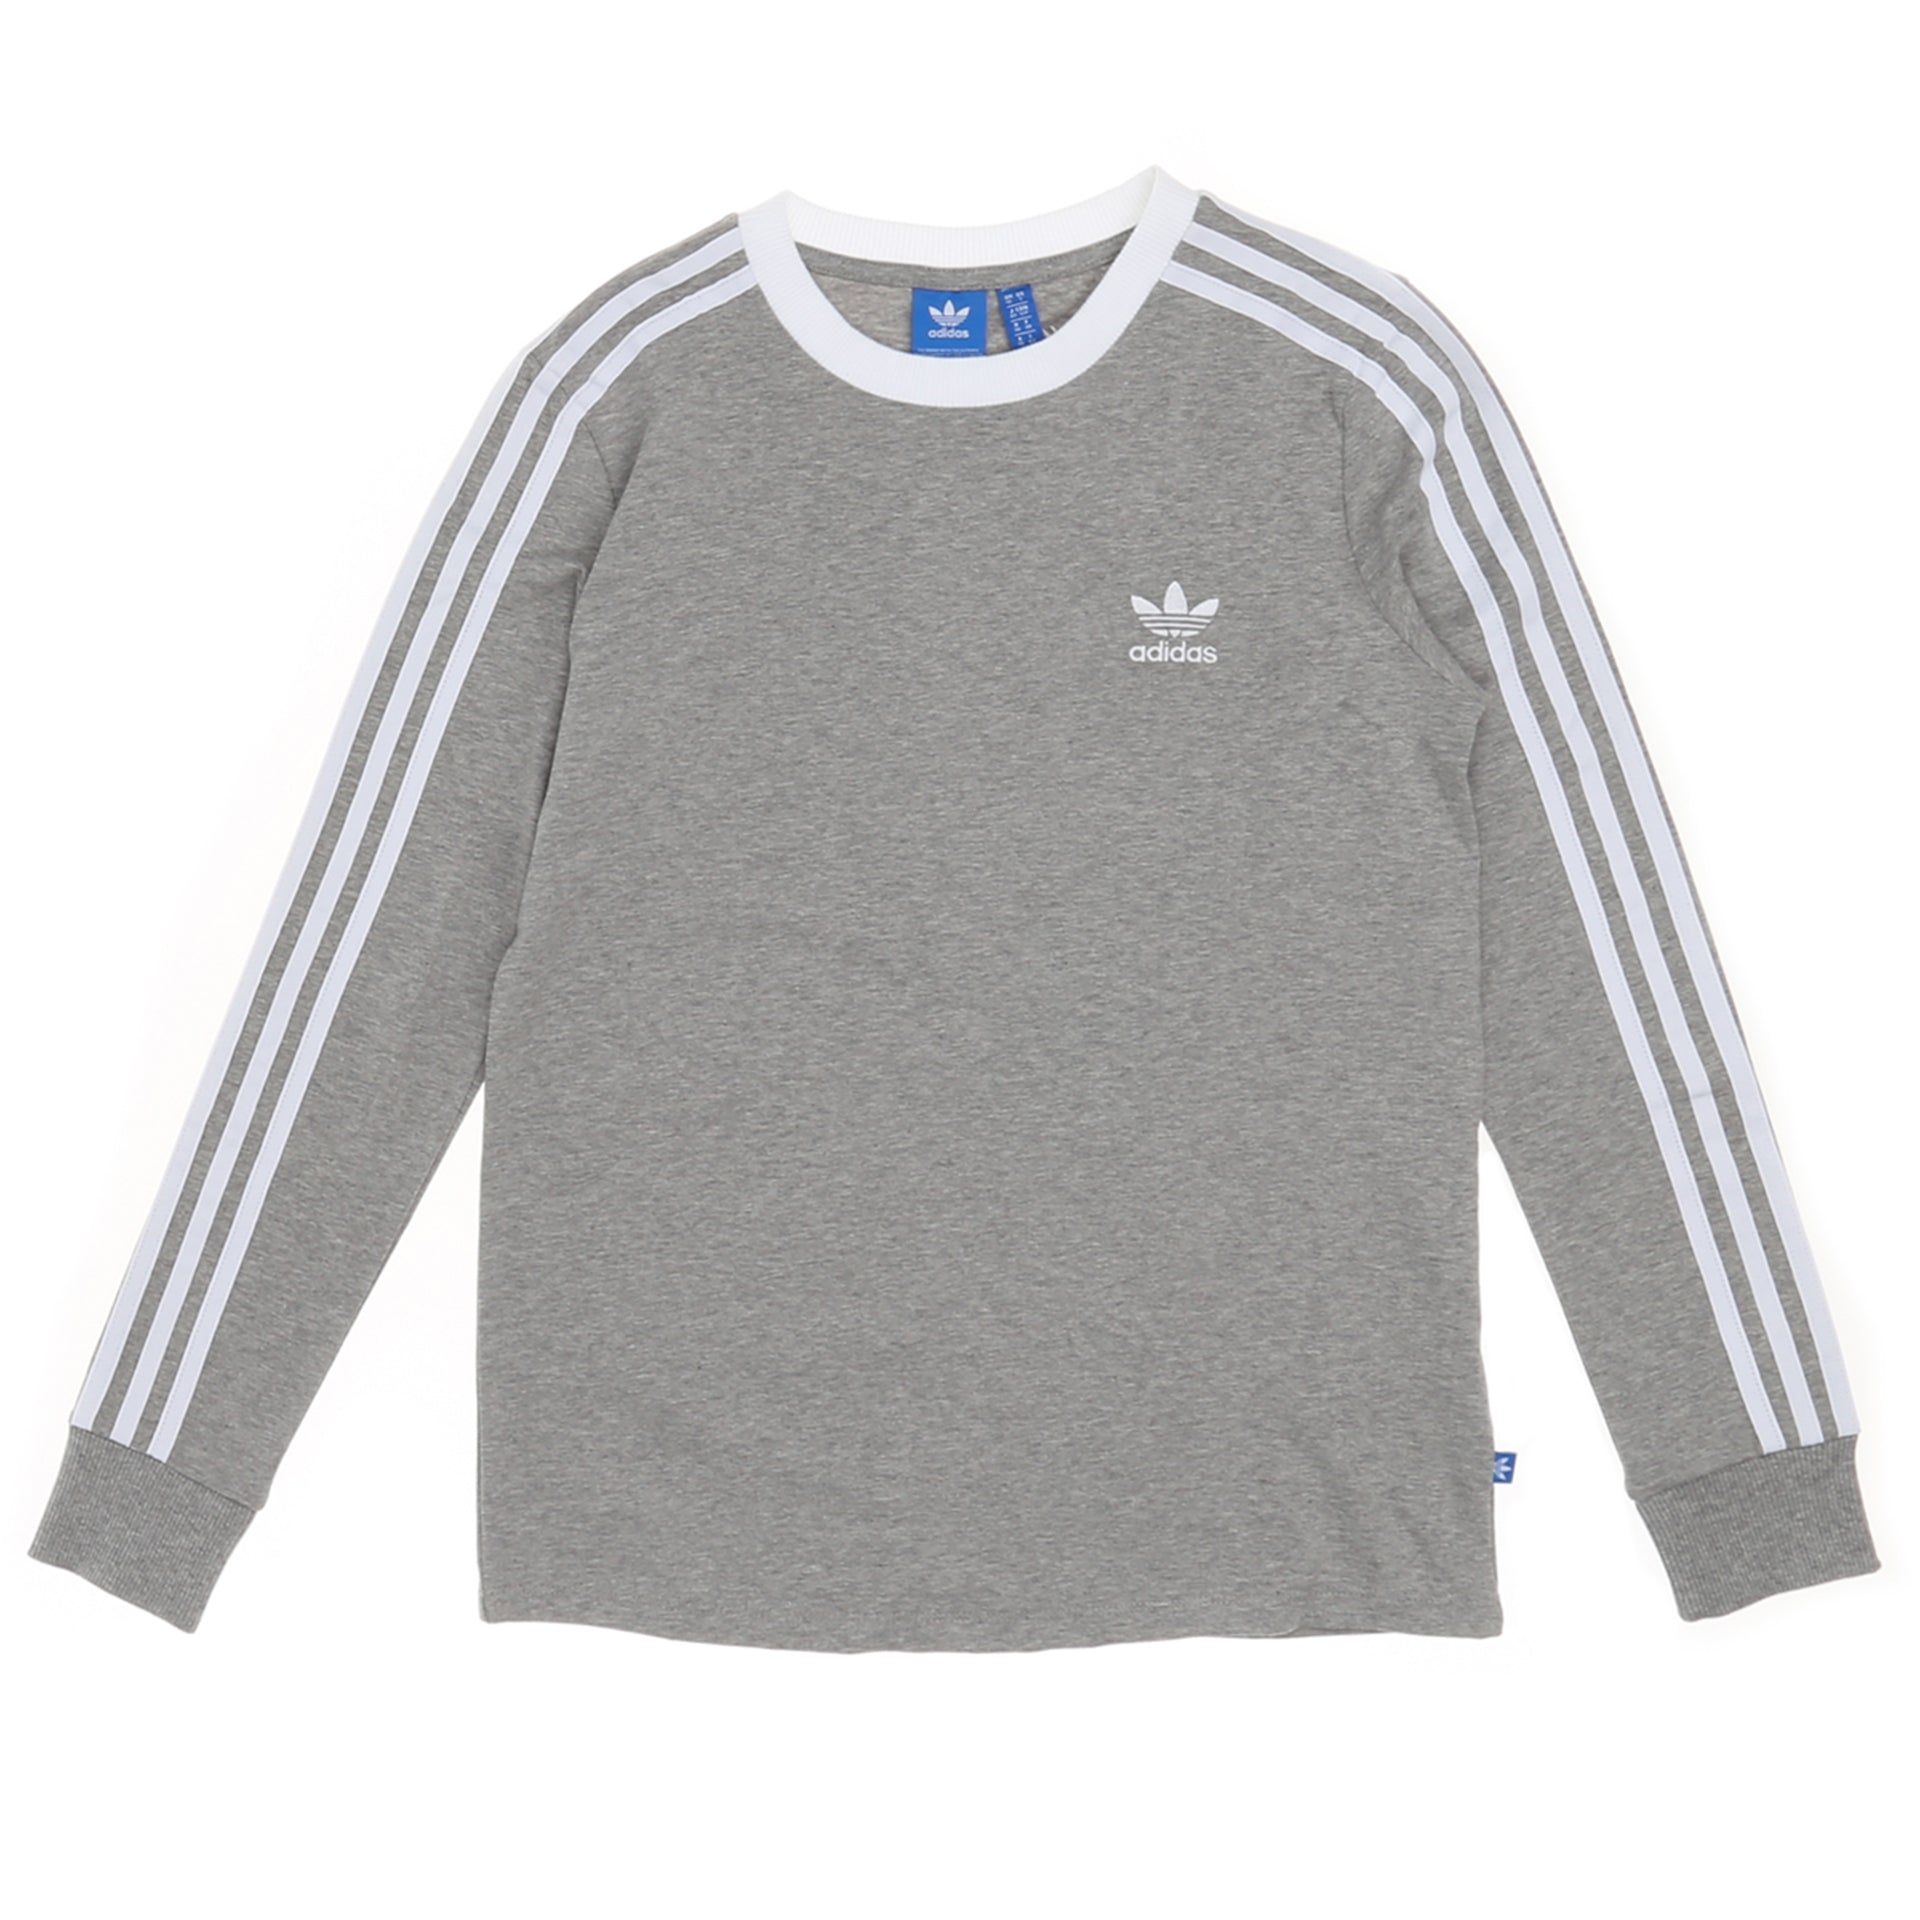 Adidas Women\'s 3 Stripe LS Tee - Medium Grey Heather - New Star